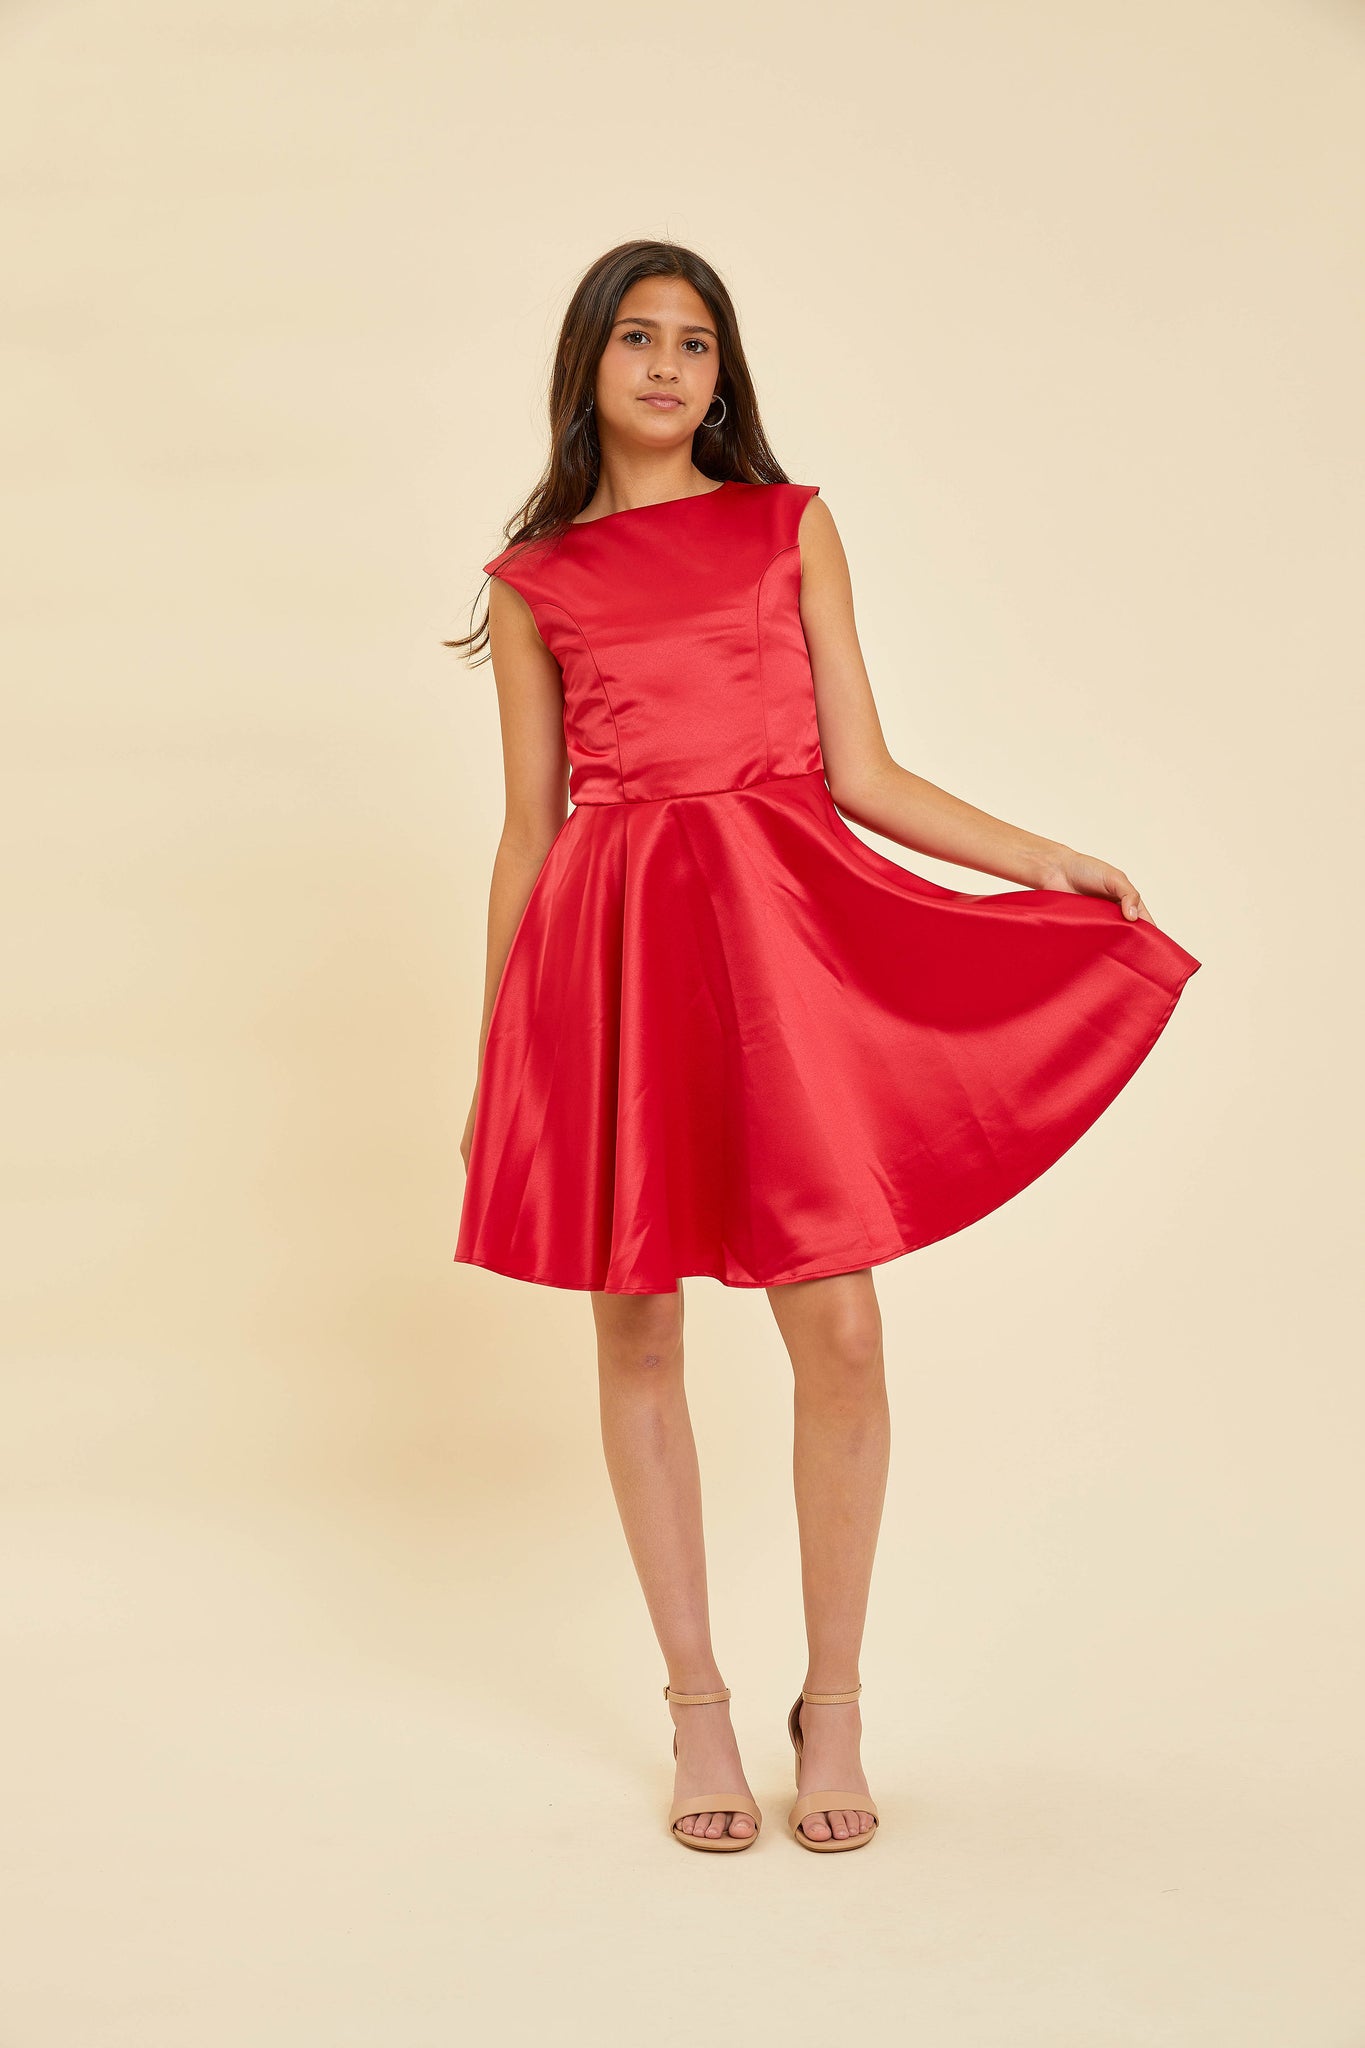 Brunette in a red satin dress.